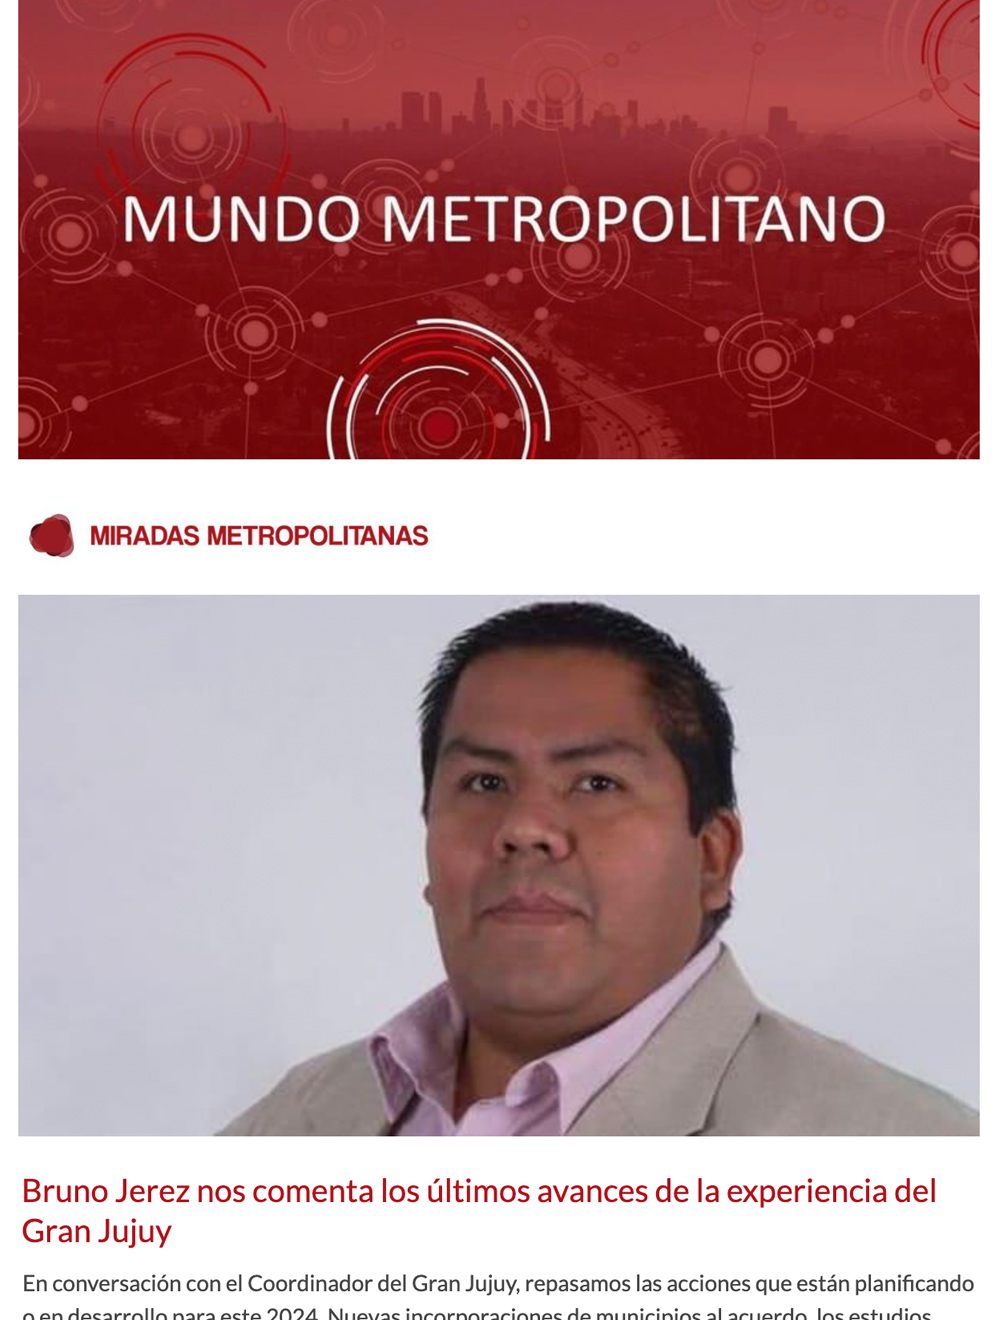 Newsletter Mundo Metropolitano 16